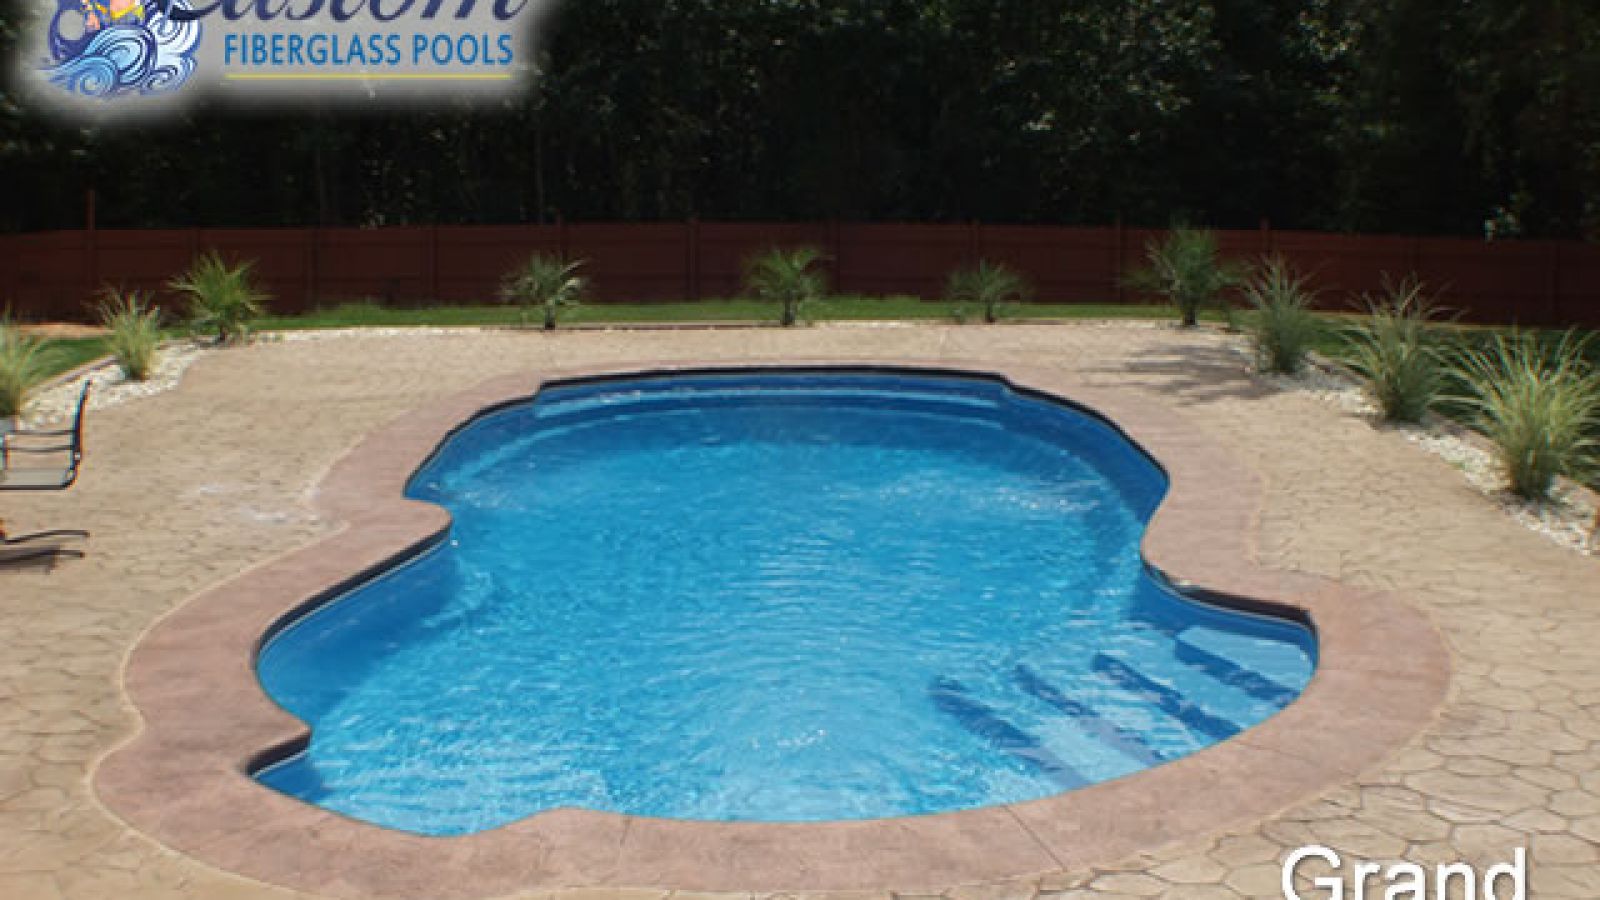 Grand Cayman Freeform Fiberglass Pool, a luxurious addition to a Clarksville, TN backyard